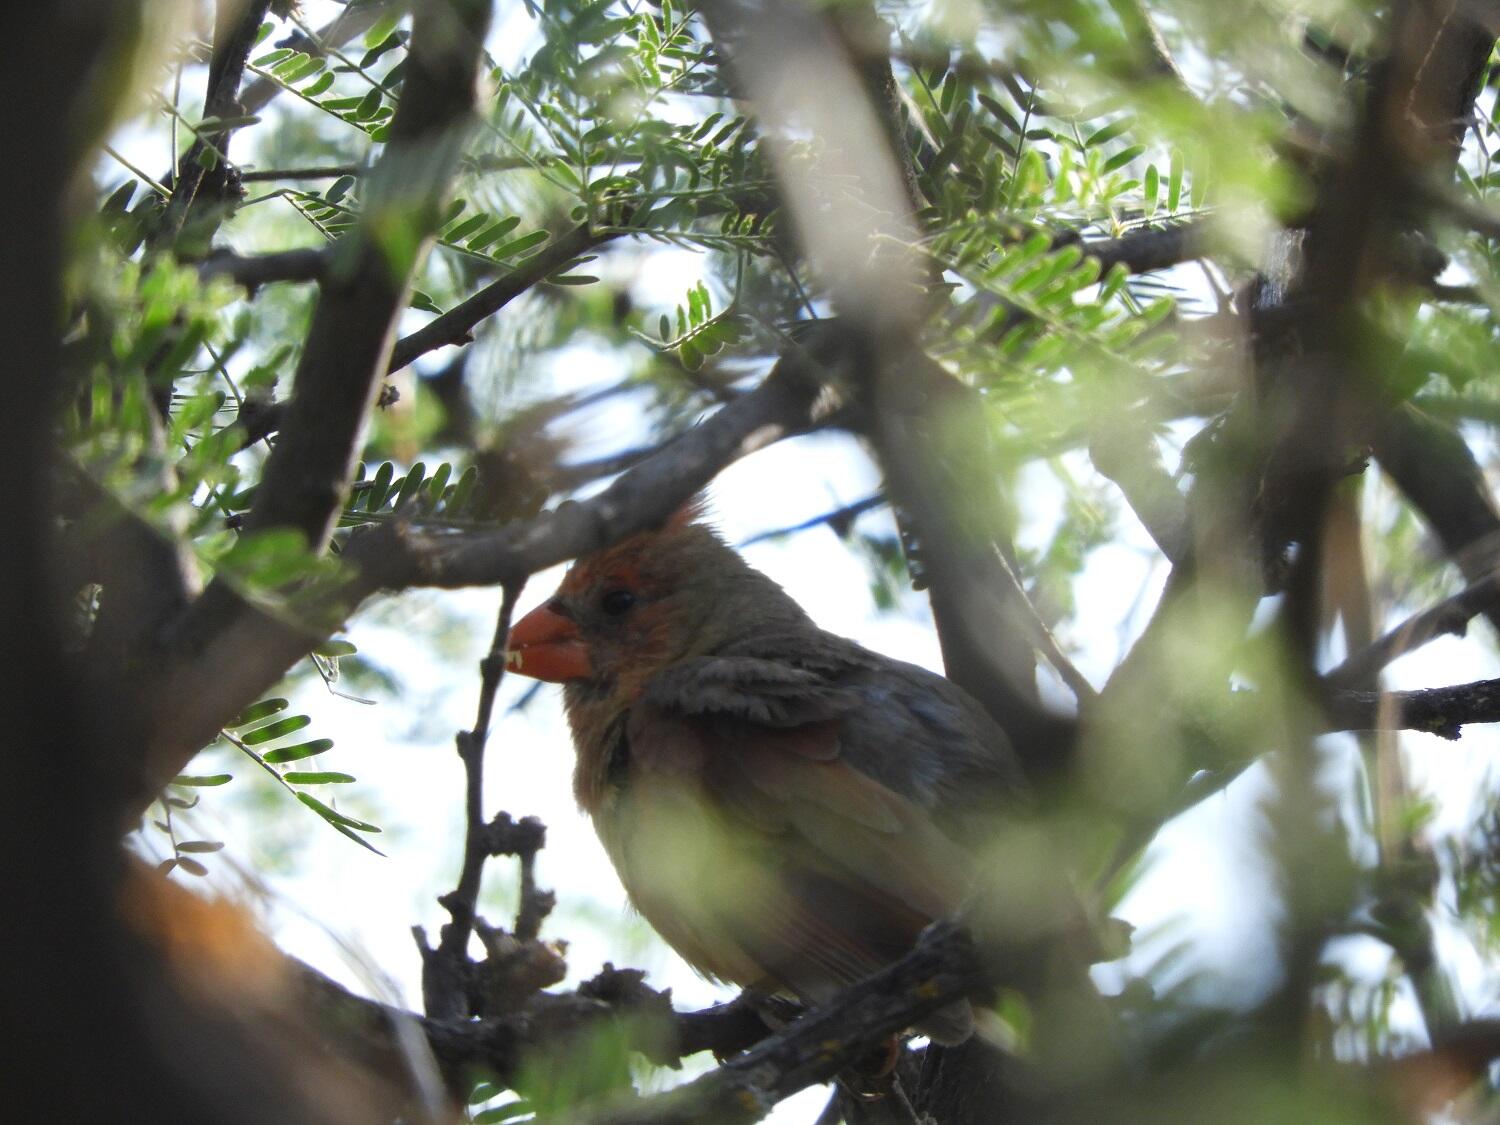 A female Northern Cardinal carefully watches Prescott Audubon surveyors during the 2018 Yellow-billed Cuckoo survey effort.